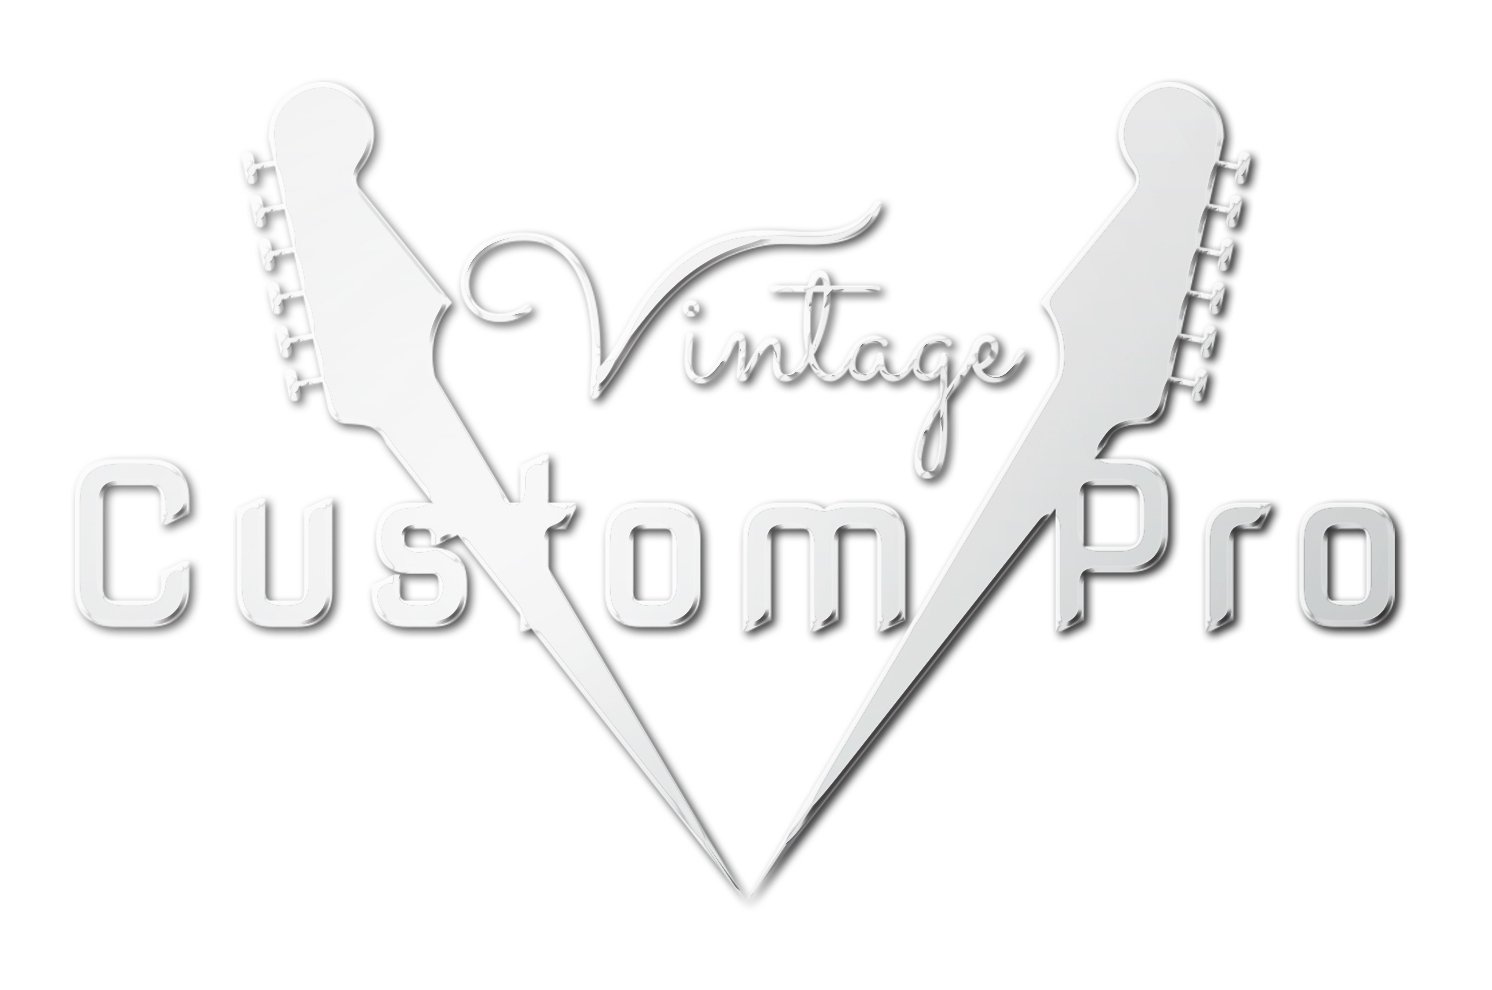 Vintage* V6M24DY Electric Guitar, Electric Guitar for sale at Richards Guitars.